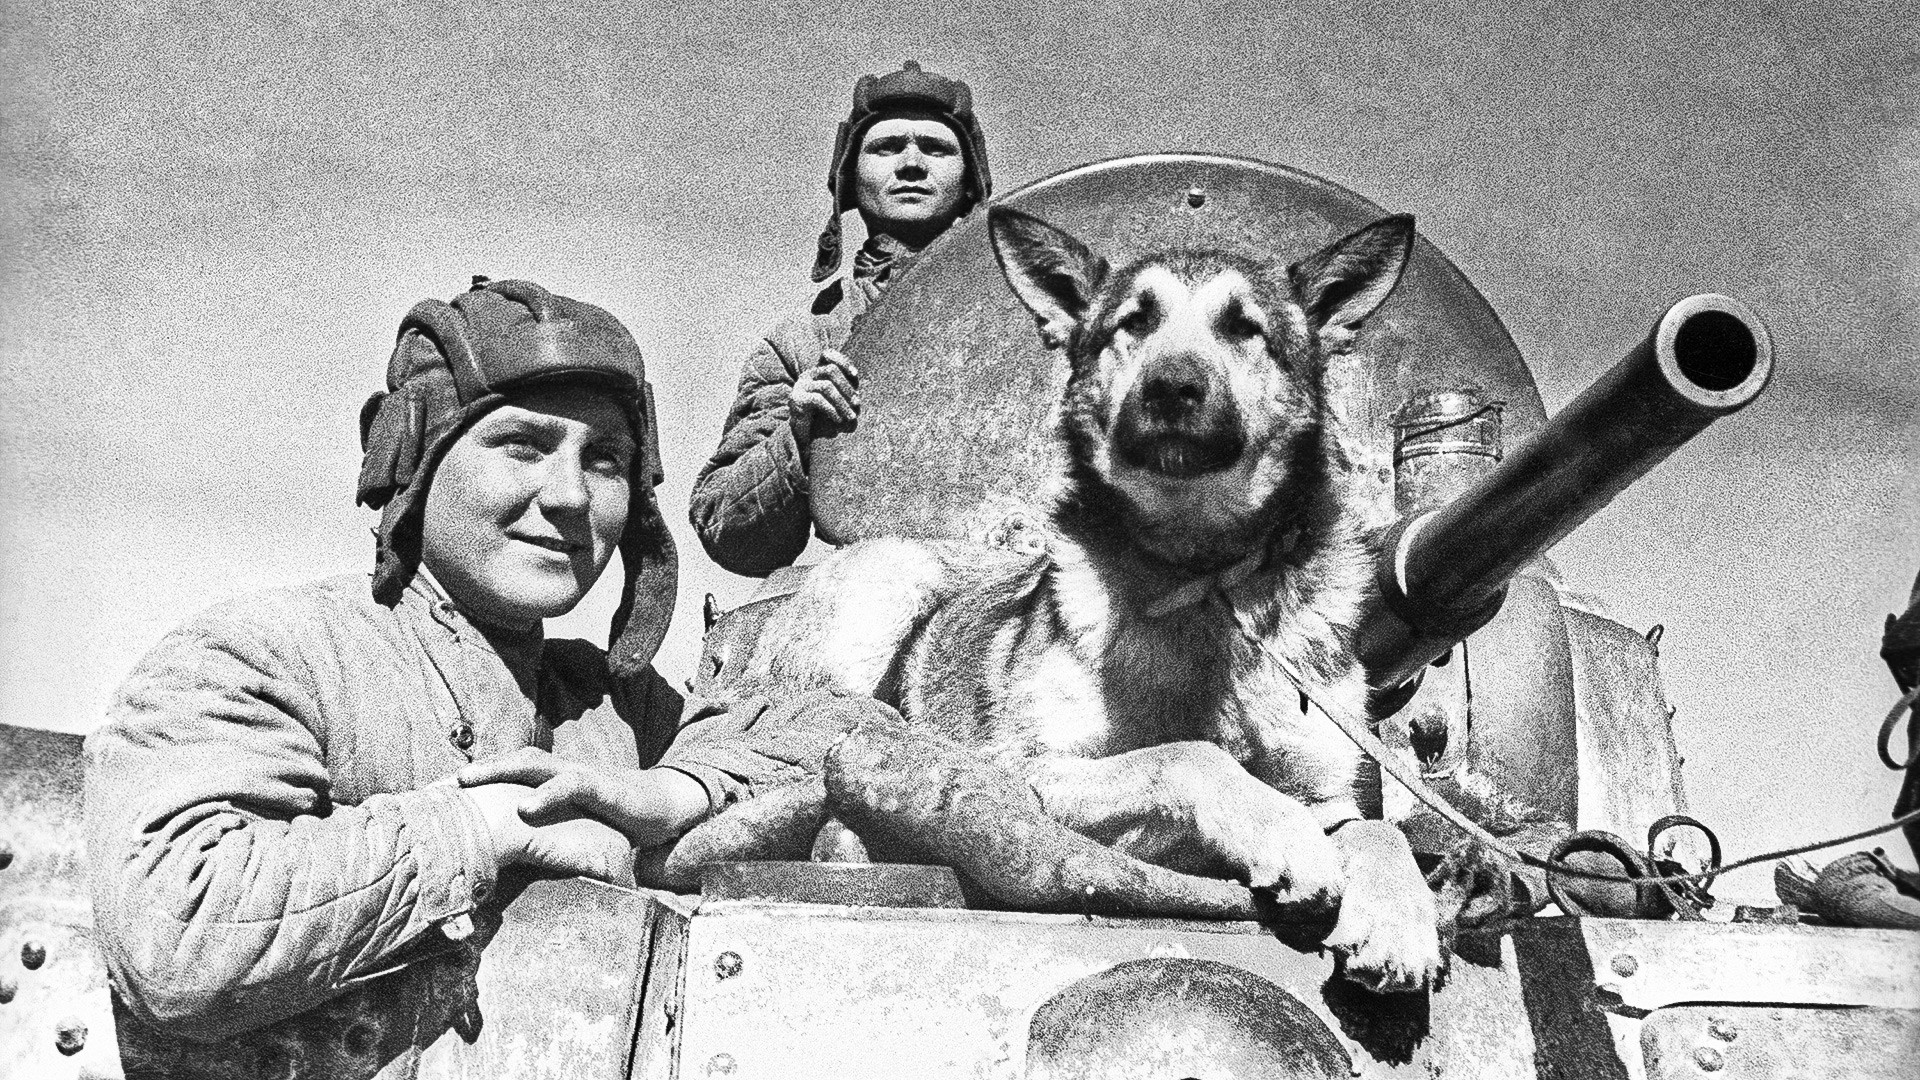 Велики отаџбински рат, Јужни фронт. Екипа оклопног возила  БА-10 са псом Џулбарсом.